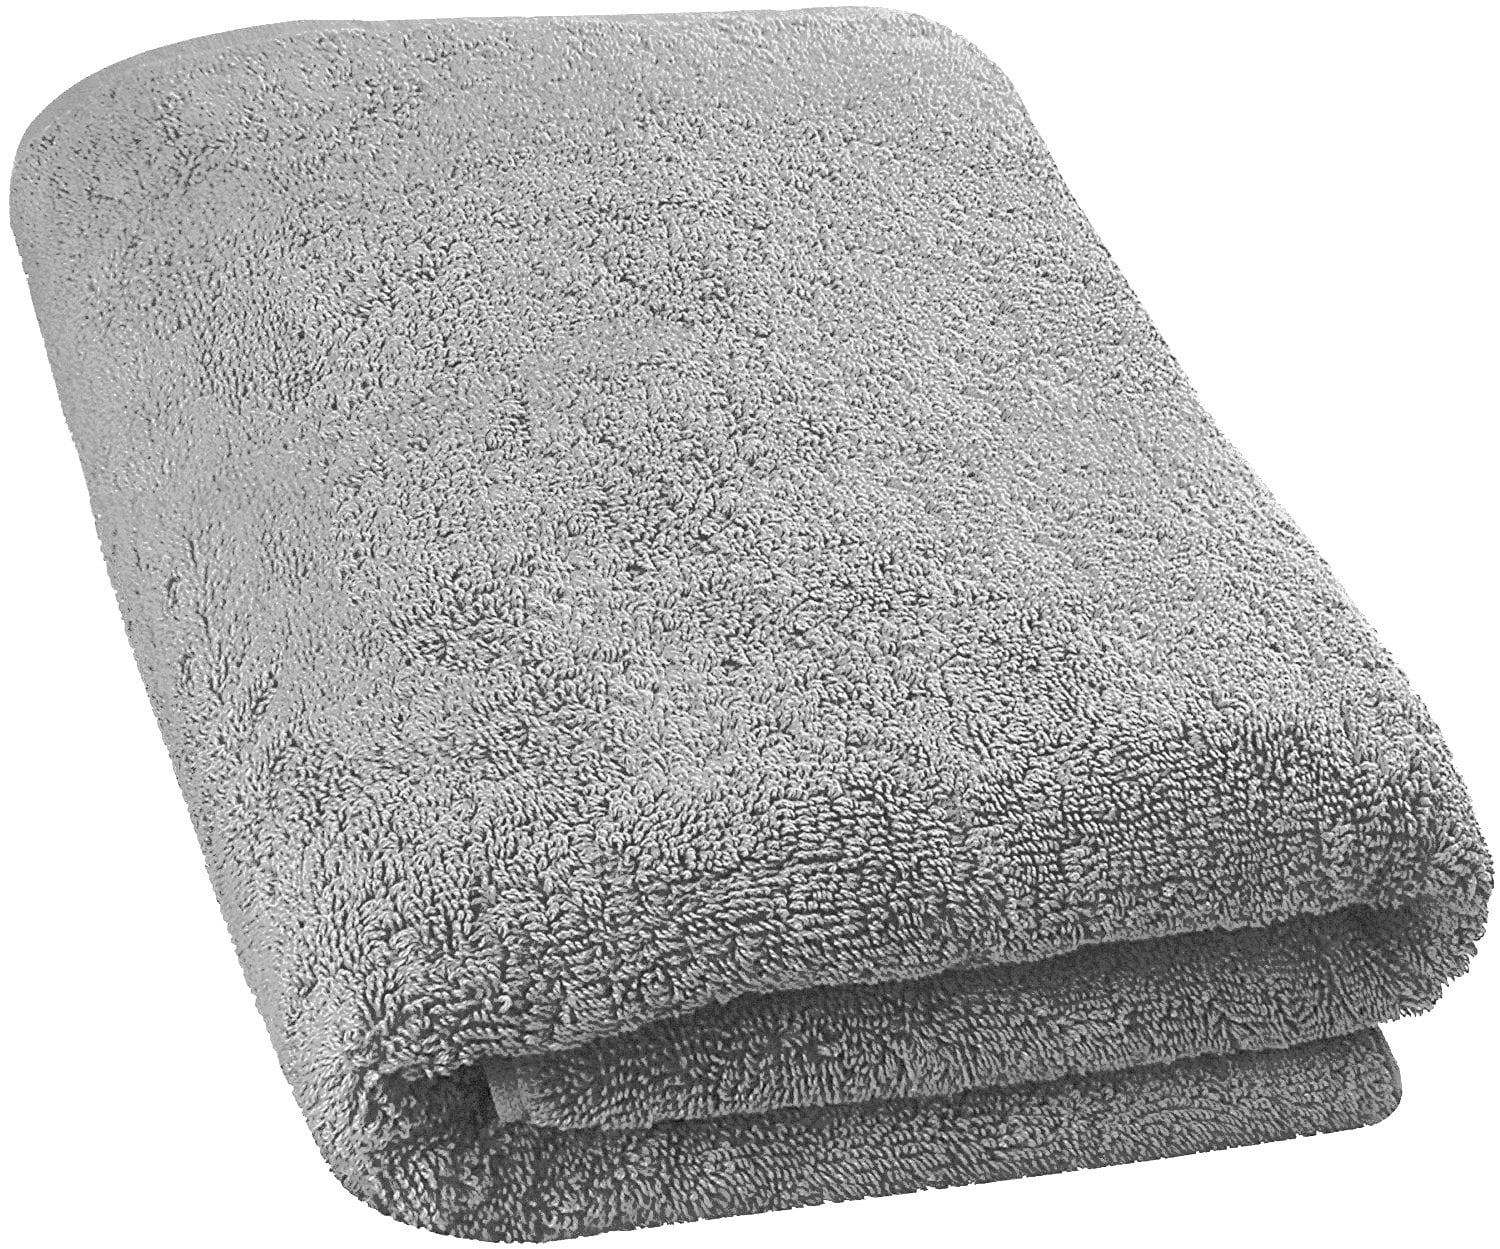 100% Cotton Extra Large Oversized Bath Towel Bath Sheet 40x82" Navy Blue